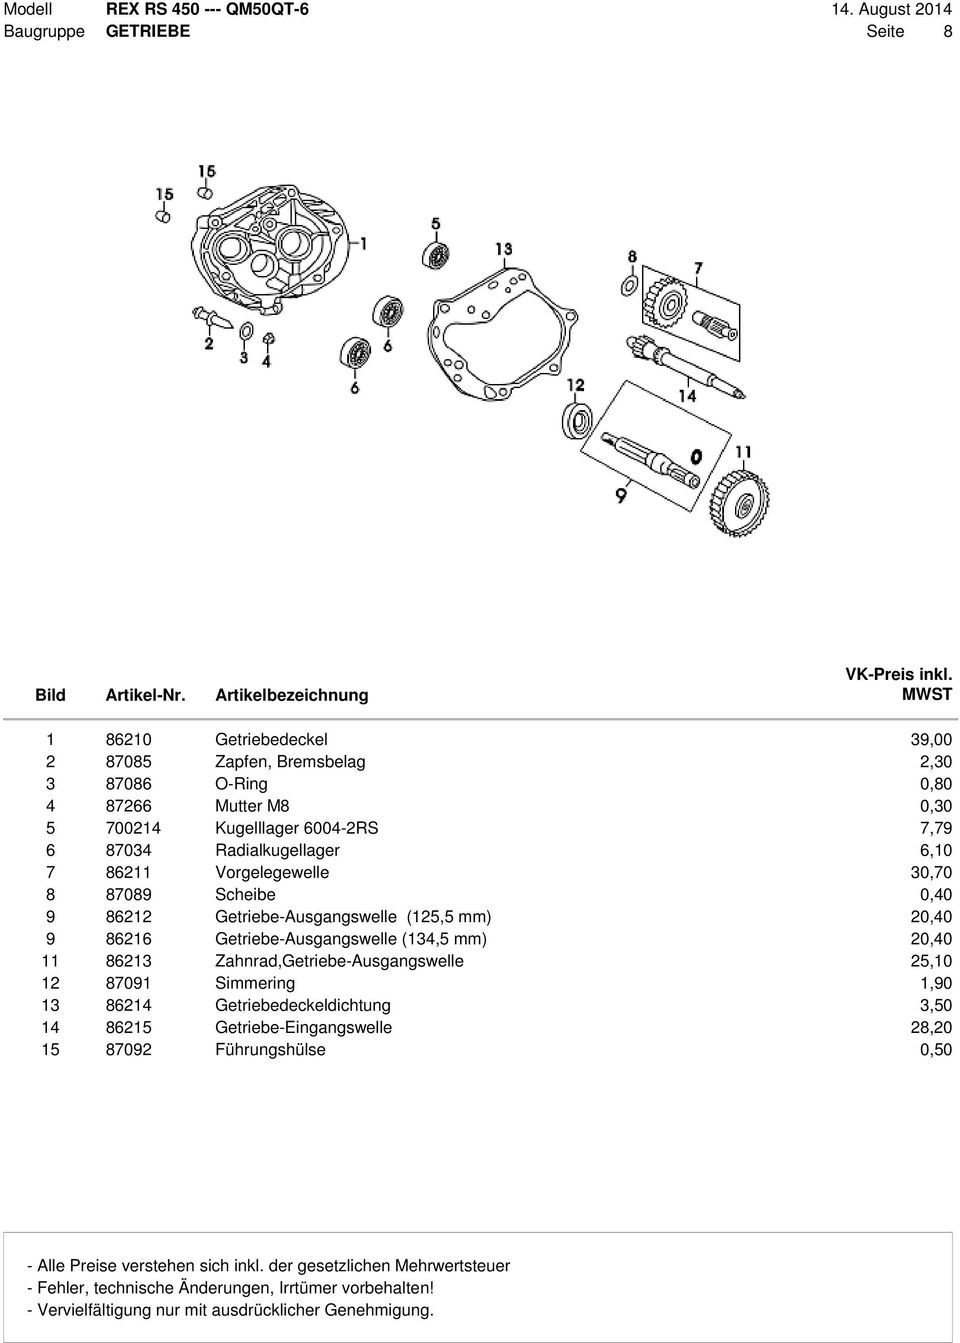 Getriebe-Ausgangswelle (125,5 mm) 20,40 9 86216 Getriebe-Ausgangswelle (134,5 mm) 20,40 11 86213